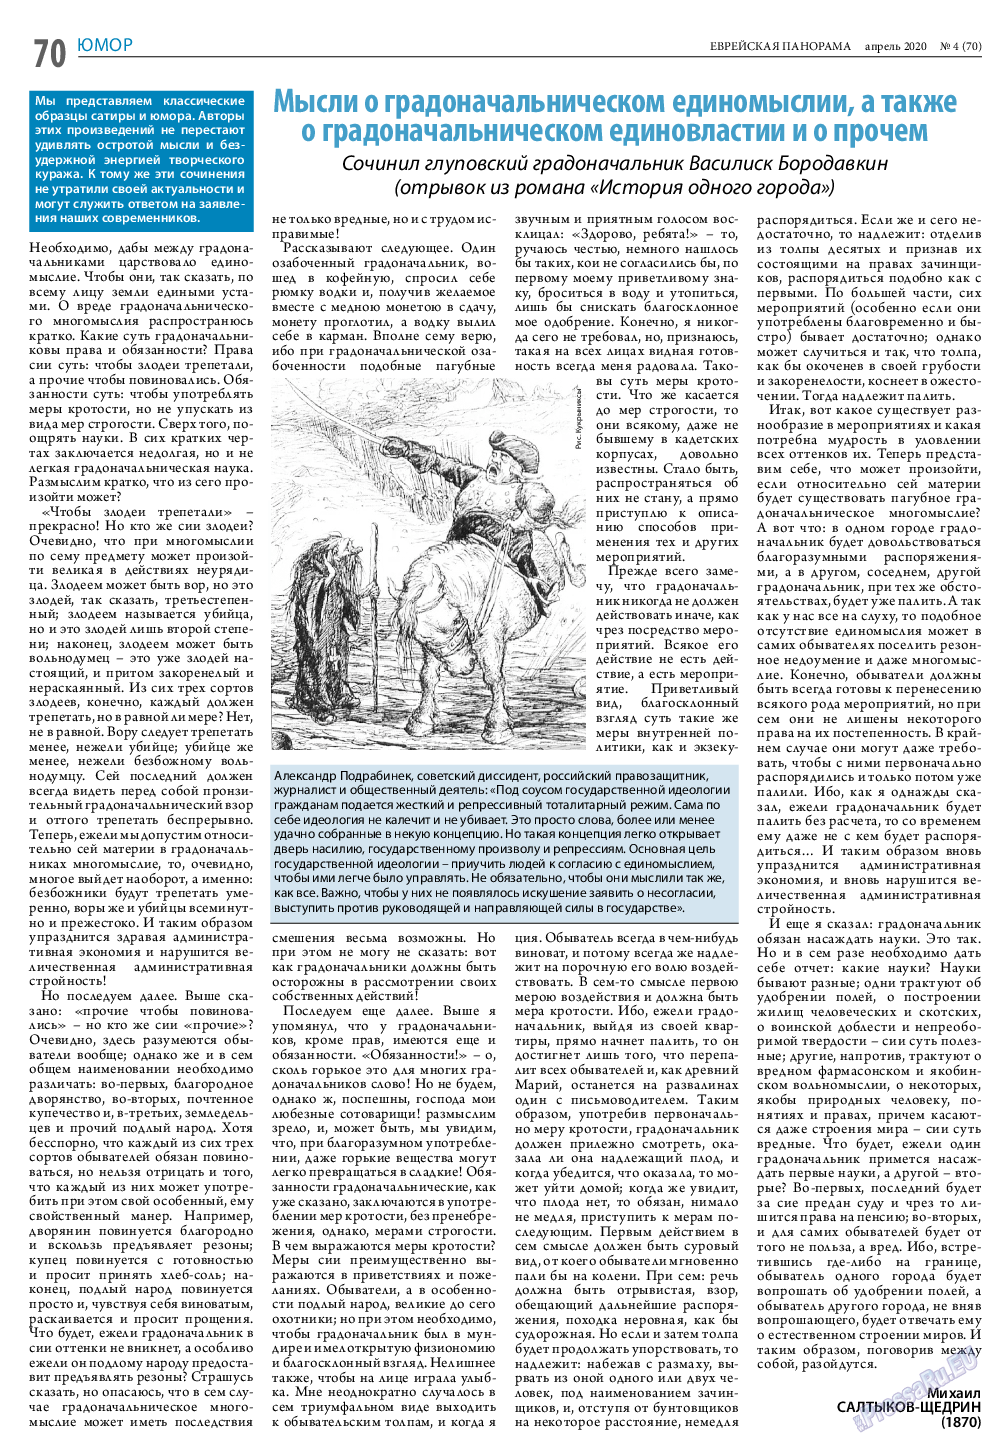 Еврейская панорама, газета. 2020 №4 стр.70